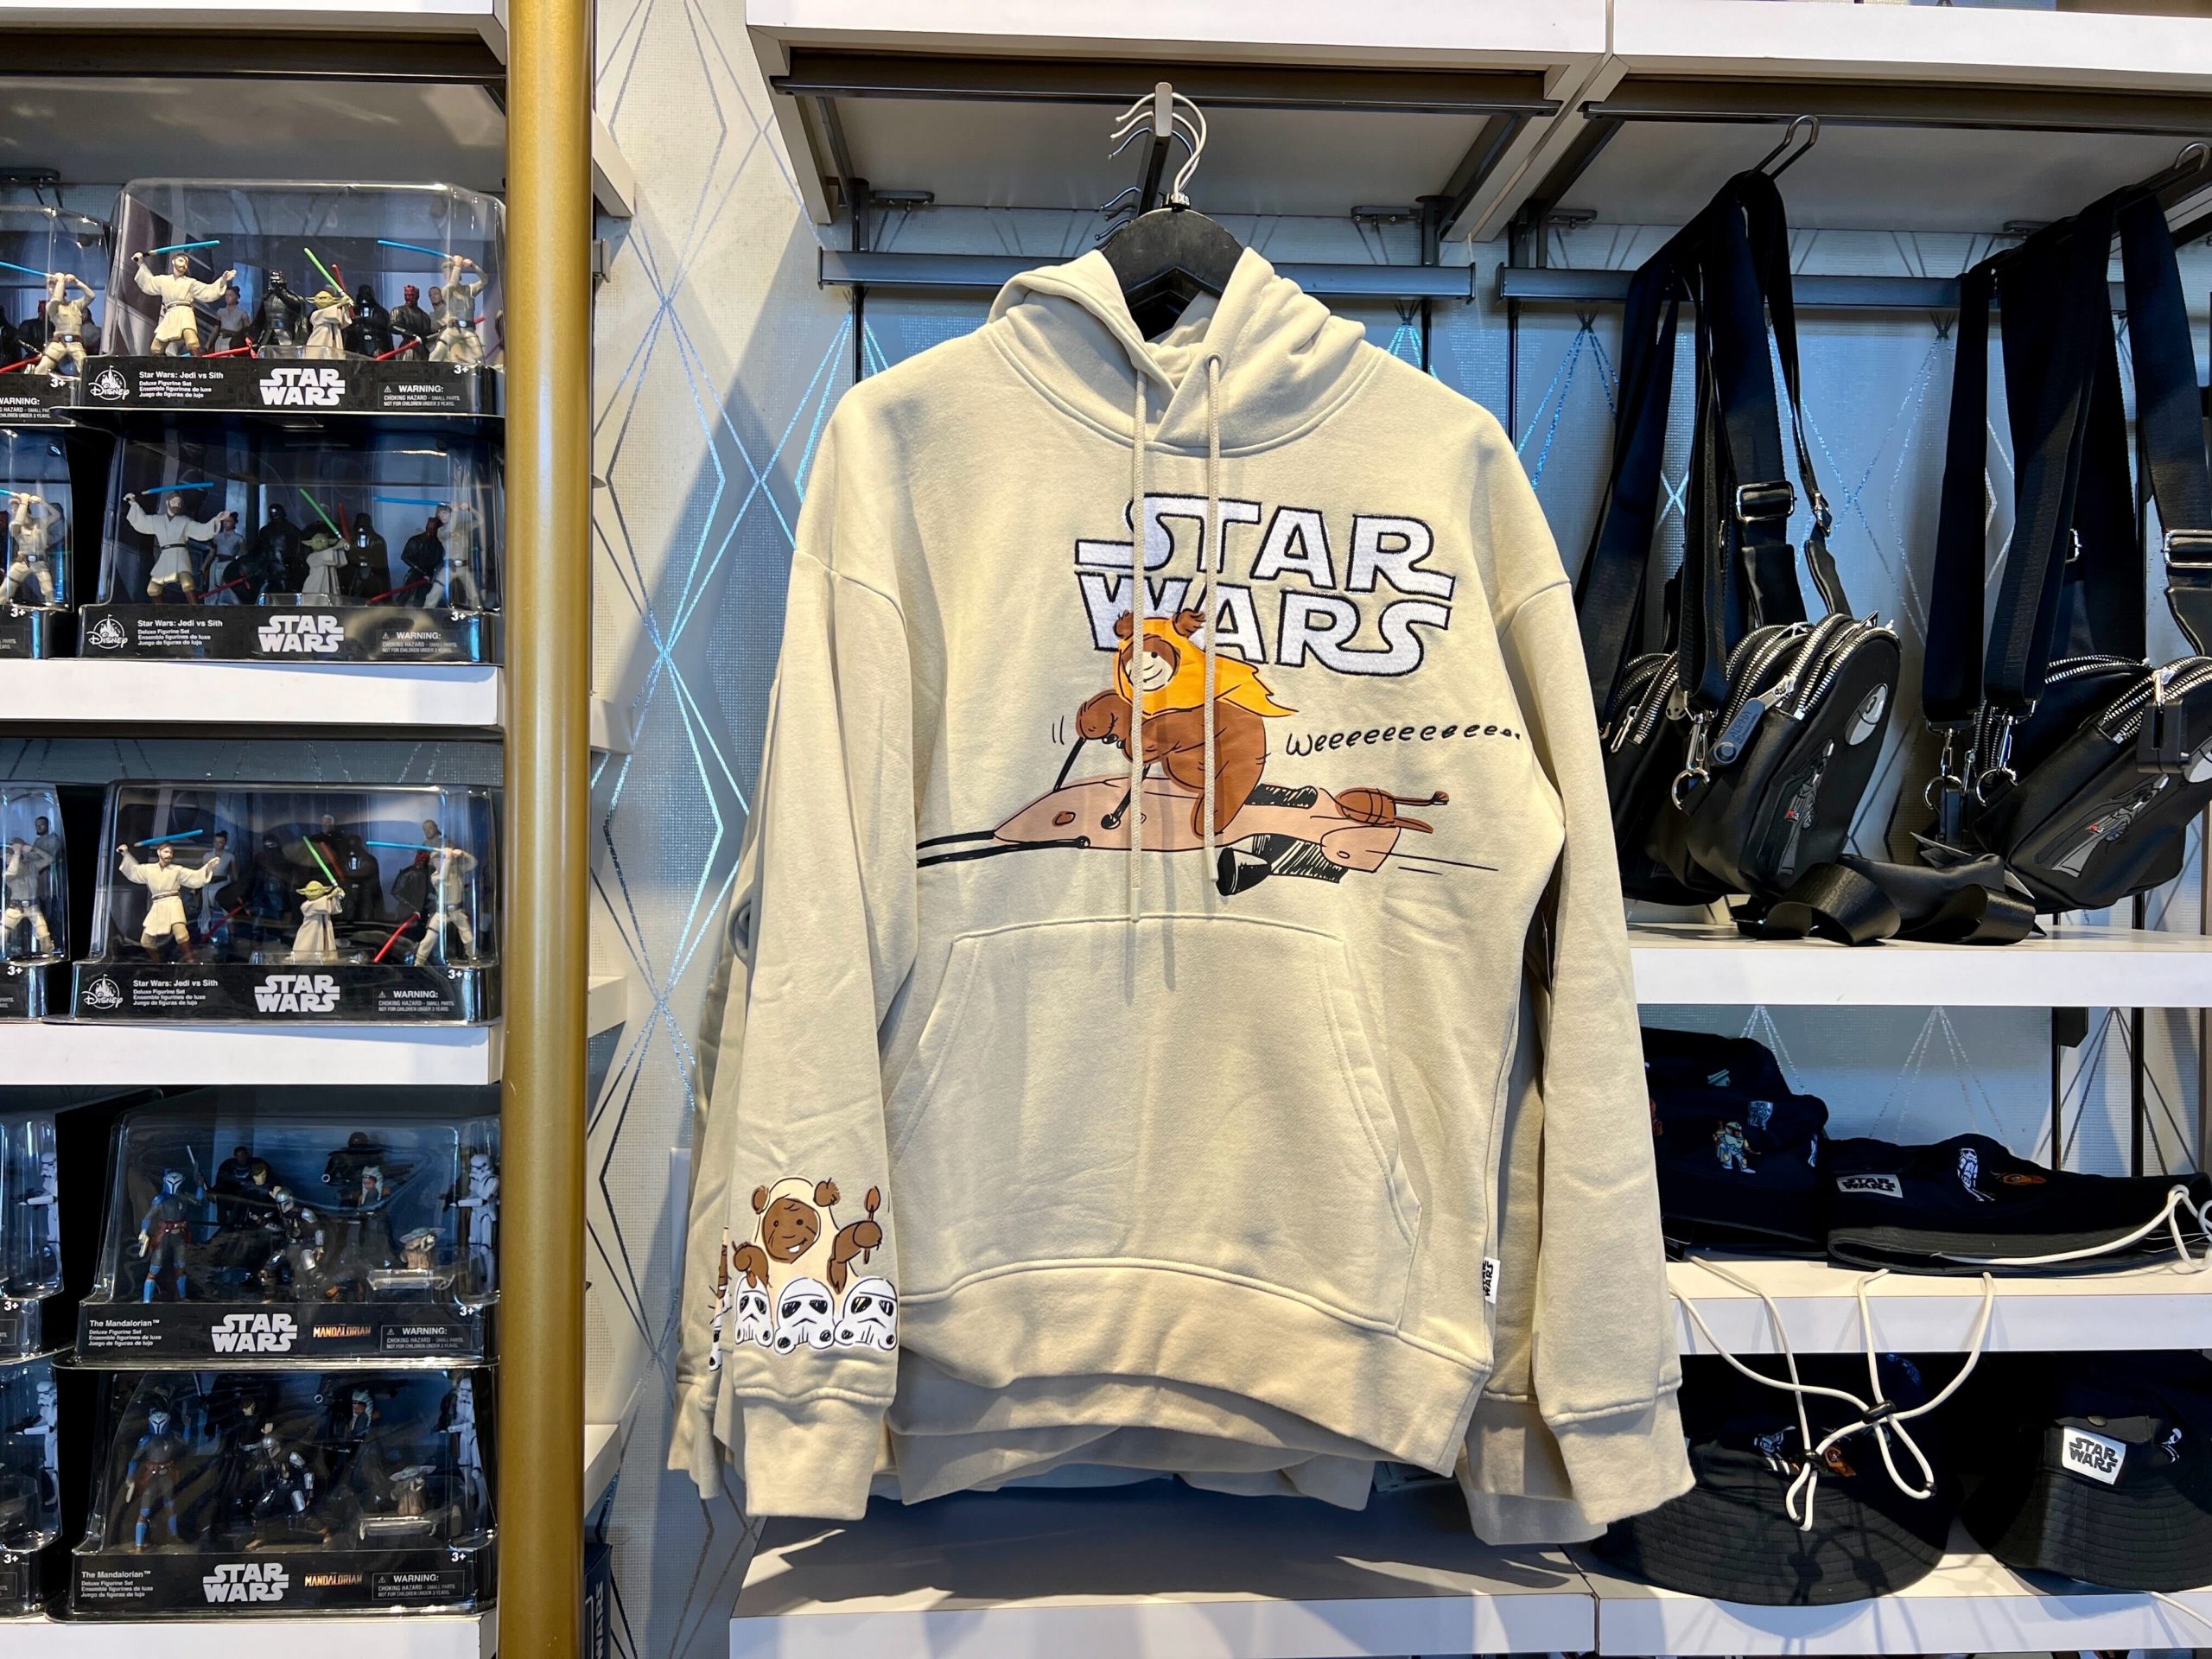 Star Wars Merchandise at Keystone Clothiers in Disney's Hollywood Studios